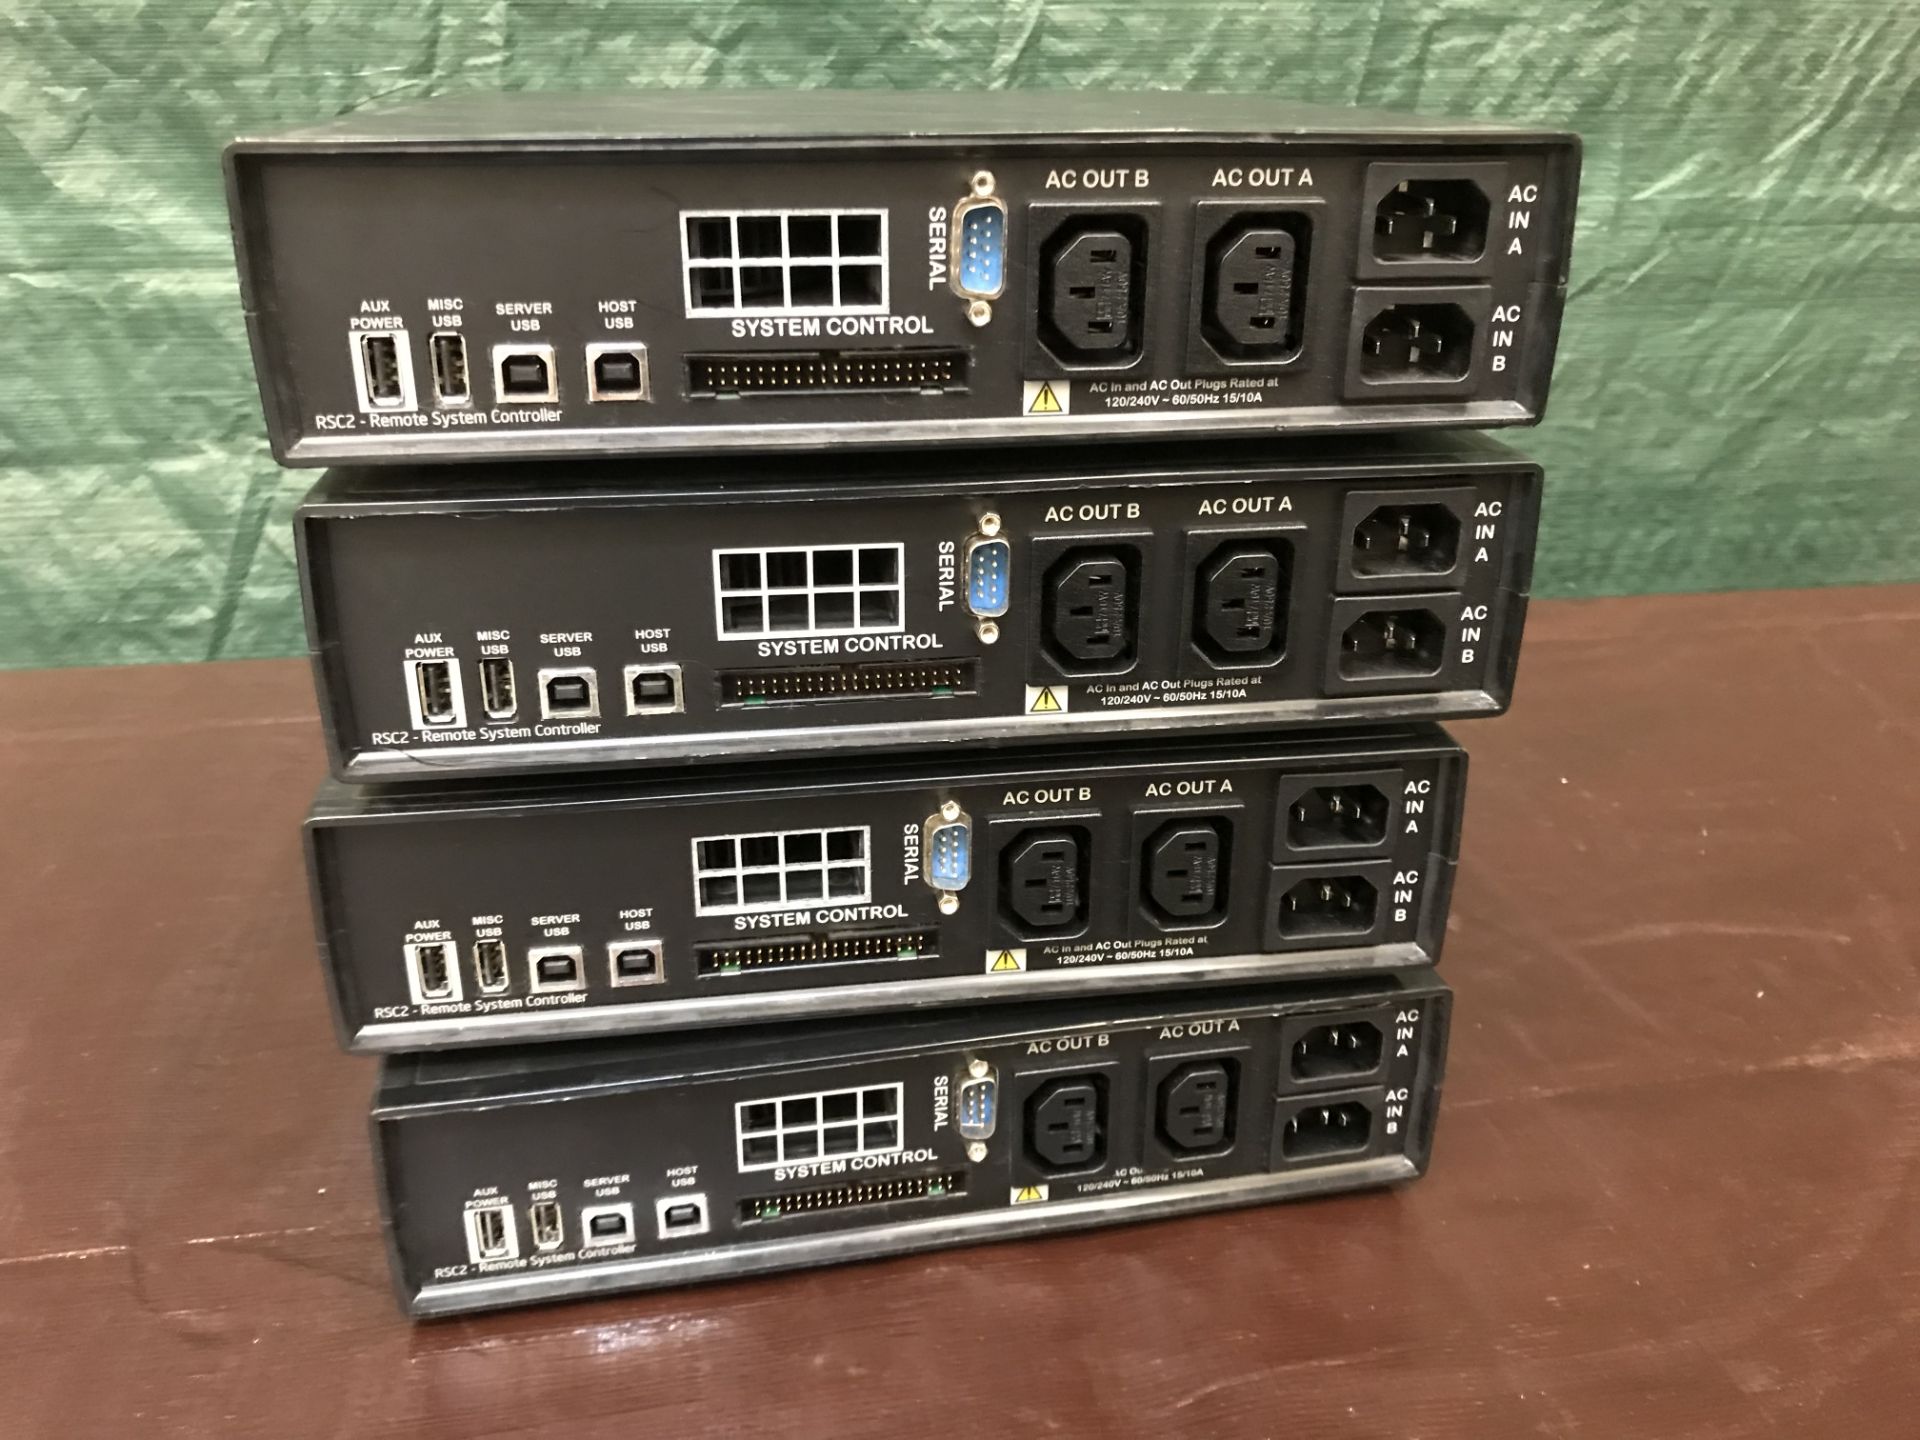 ID 220018 Lot of 4 Intel Q6UTNT00 - RSC 2 Remote System Controllers